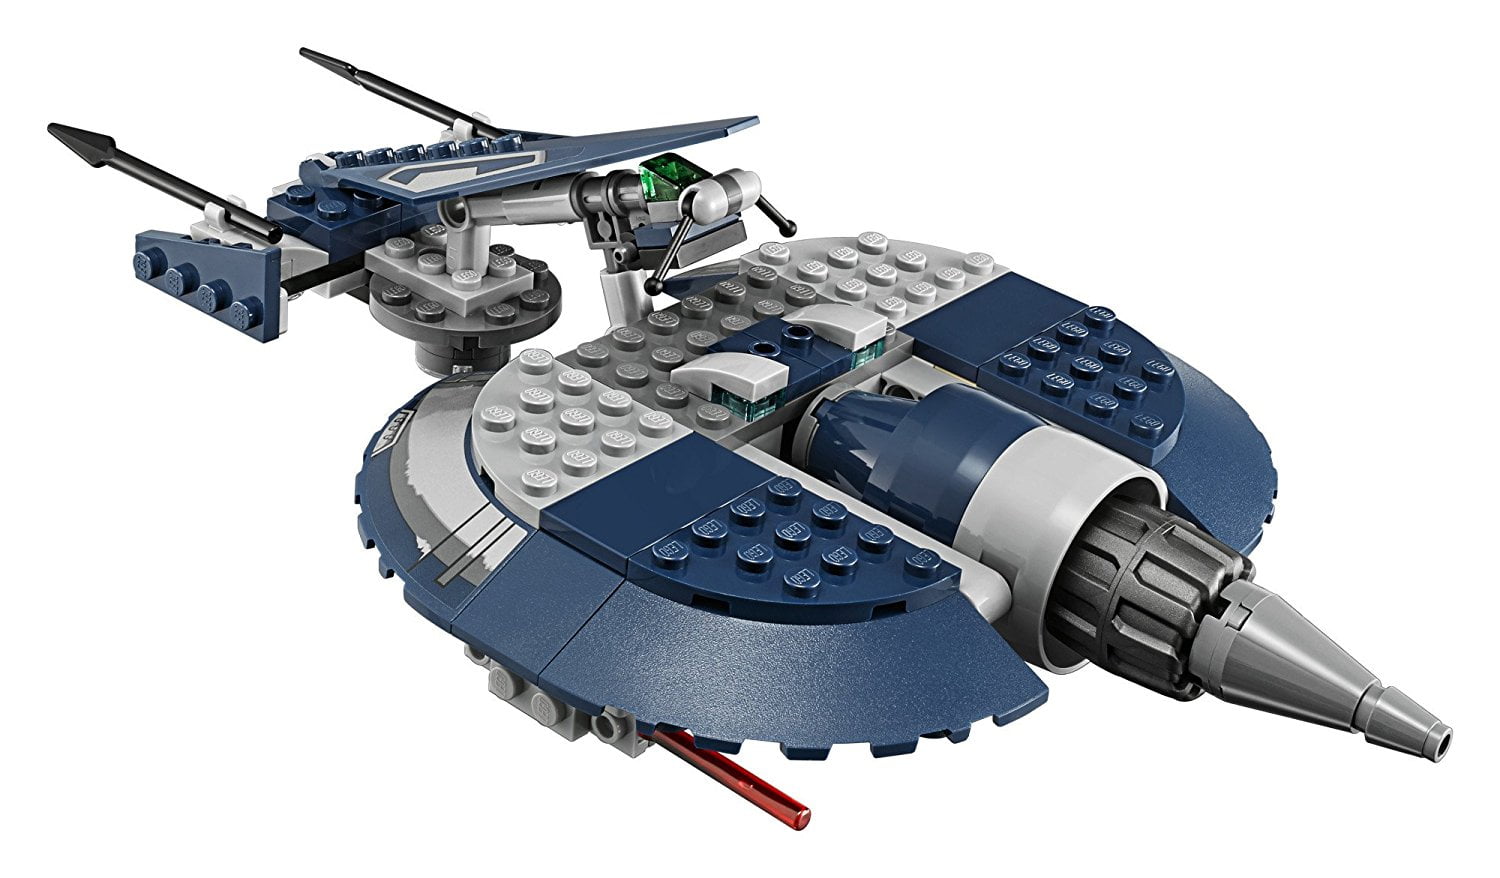 Lego Star Wars-Mace Windu-Nuevo de Set 75199